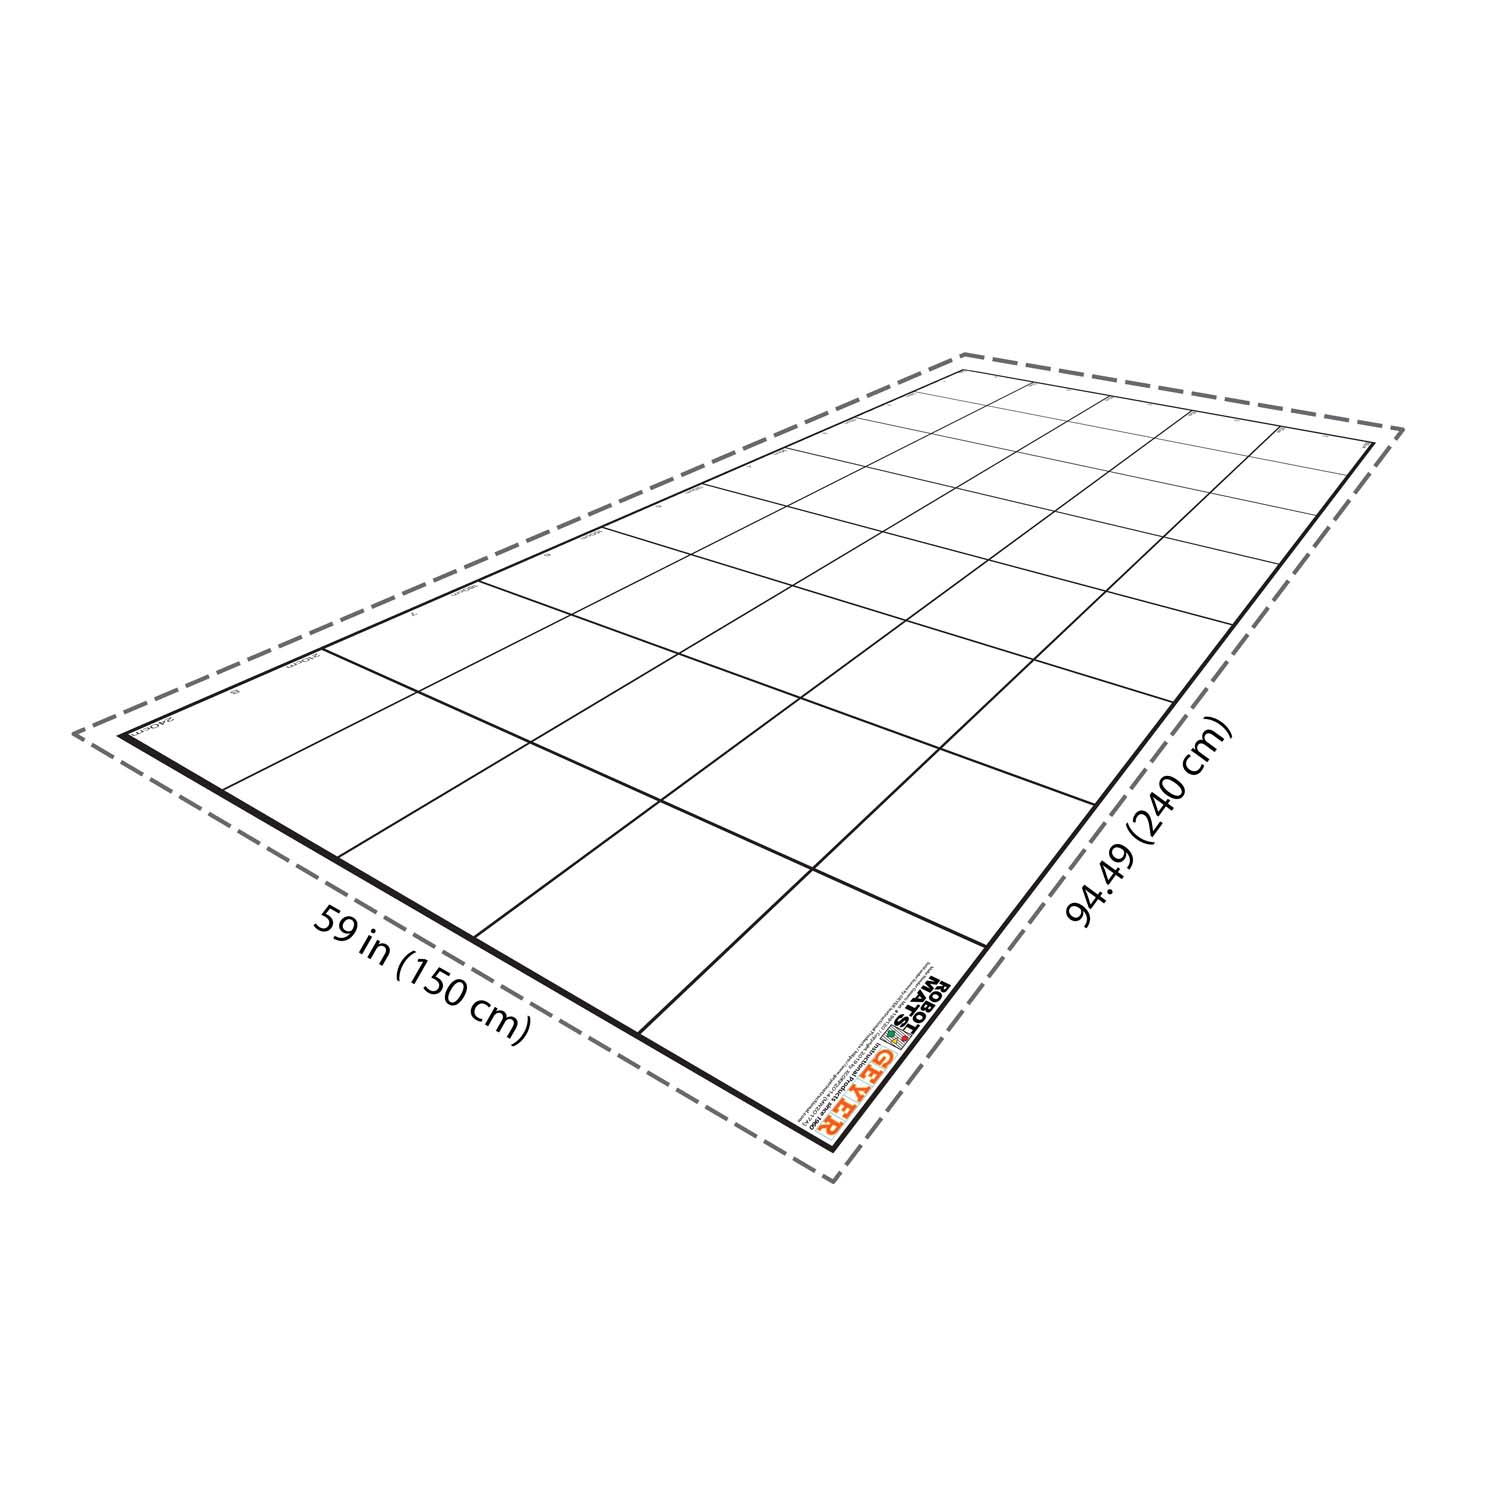 Geyer Instructional Wonder League Robotics Competition Grid Mat, 150cm x 240cm with 30cm Grid image number null